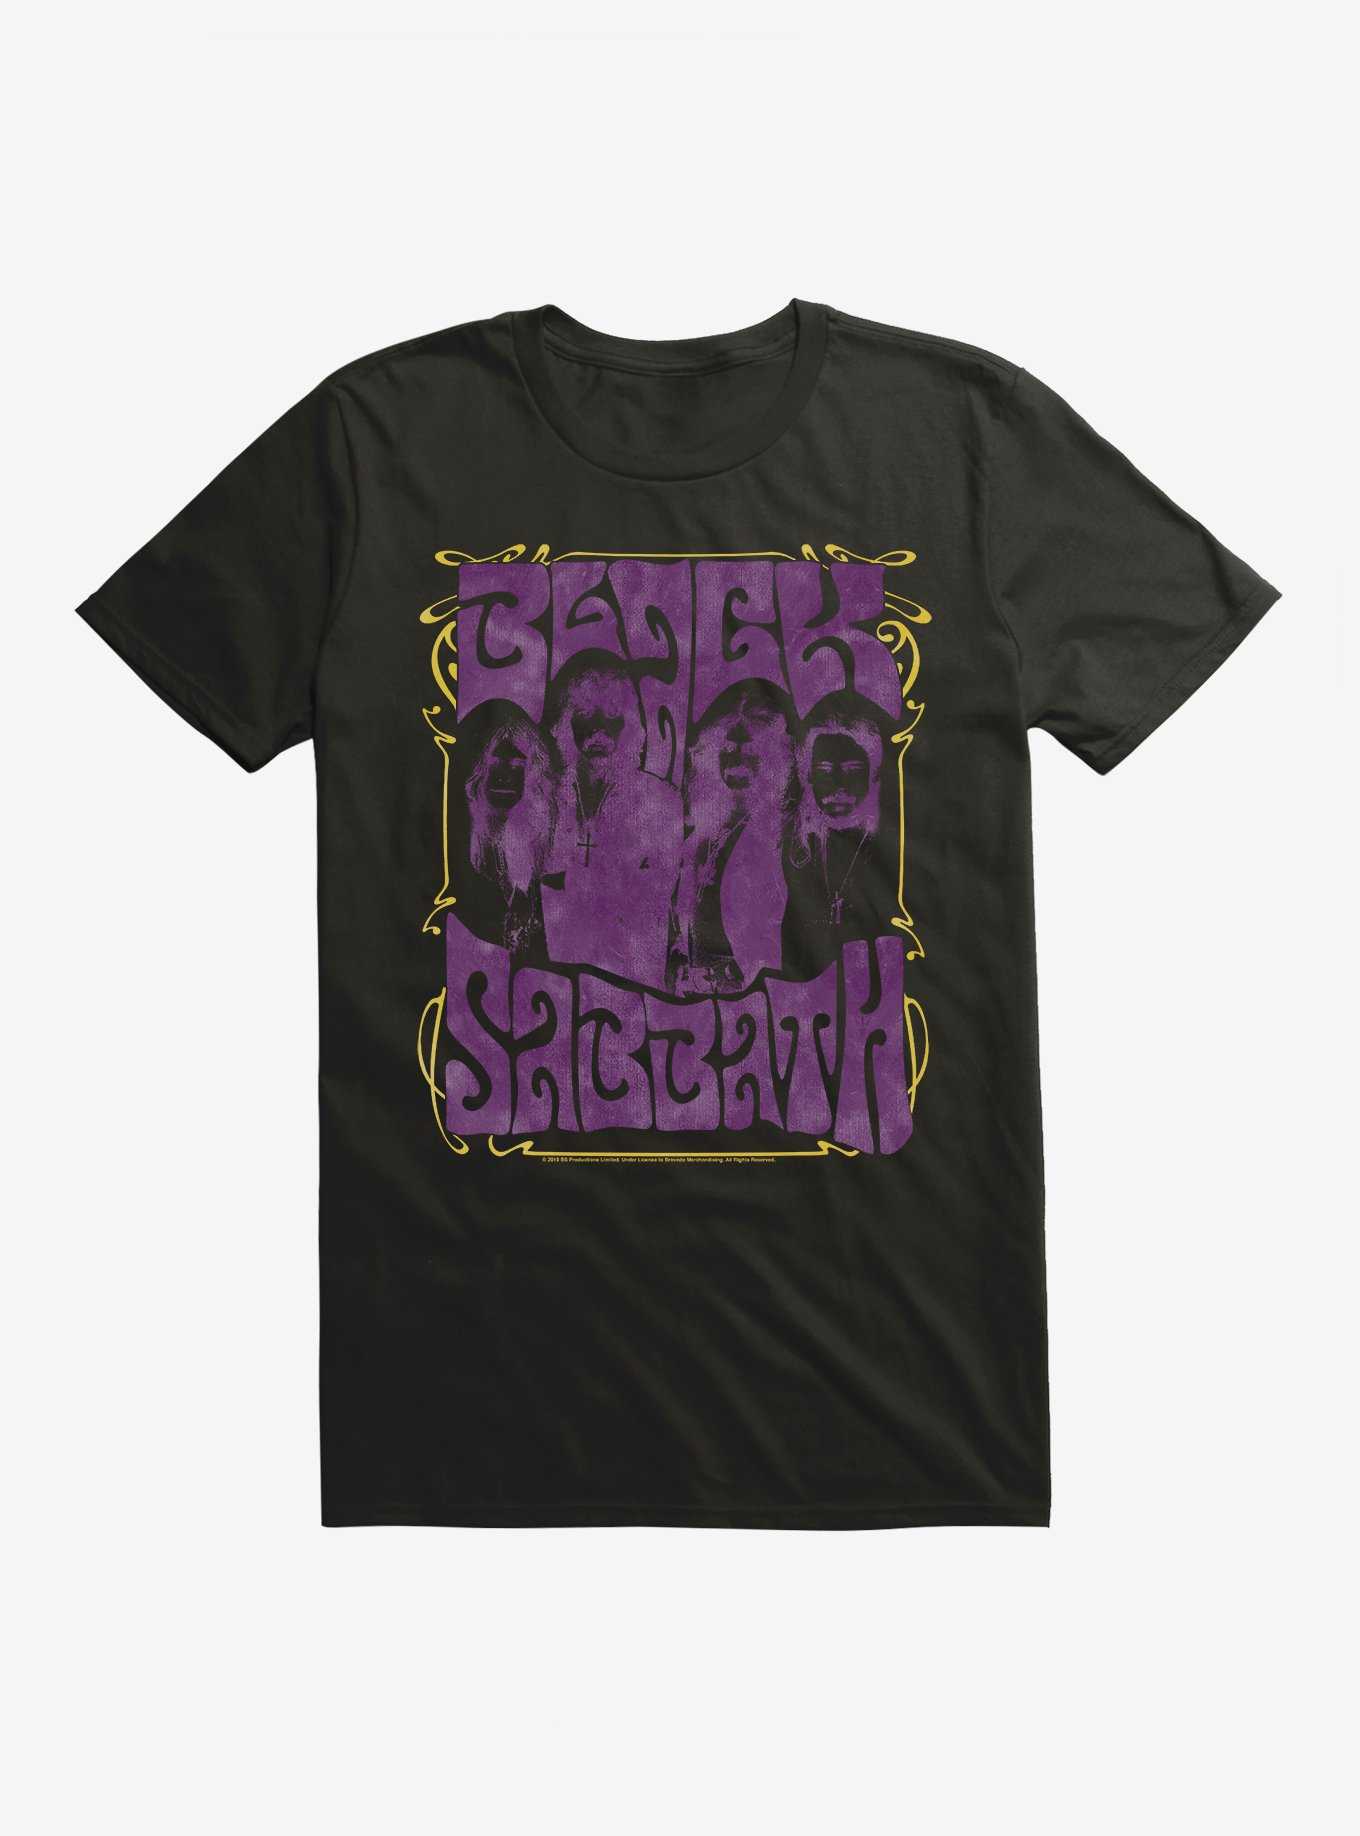 Black Sabbath Groovy Group T-Shirt, , hi-res